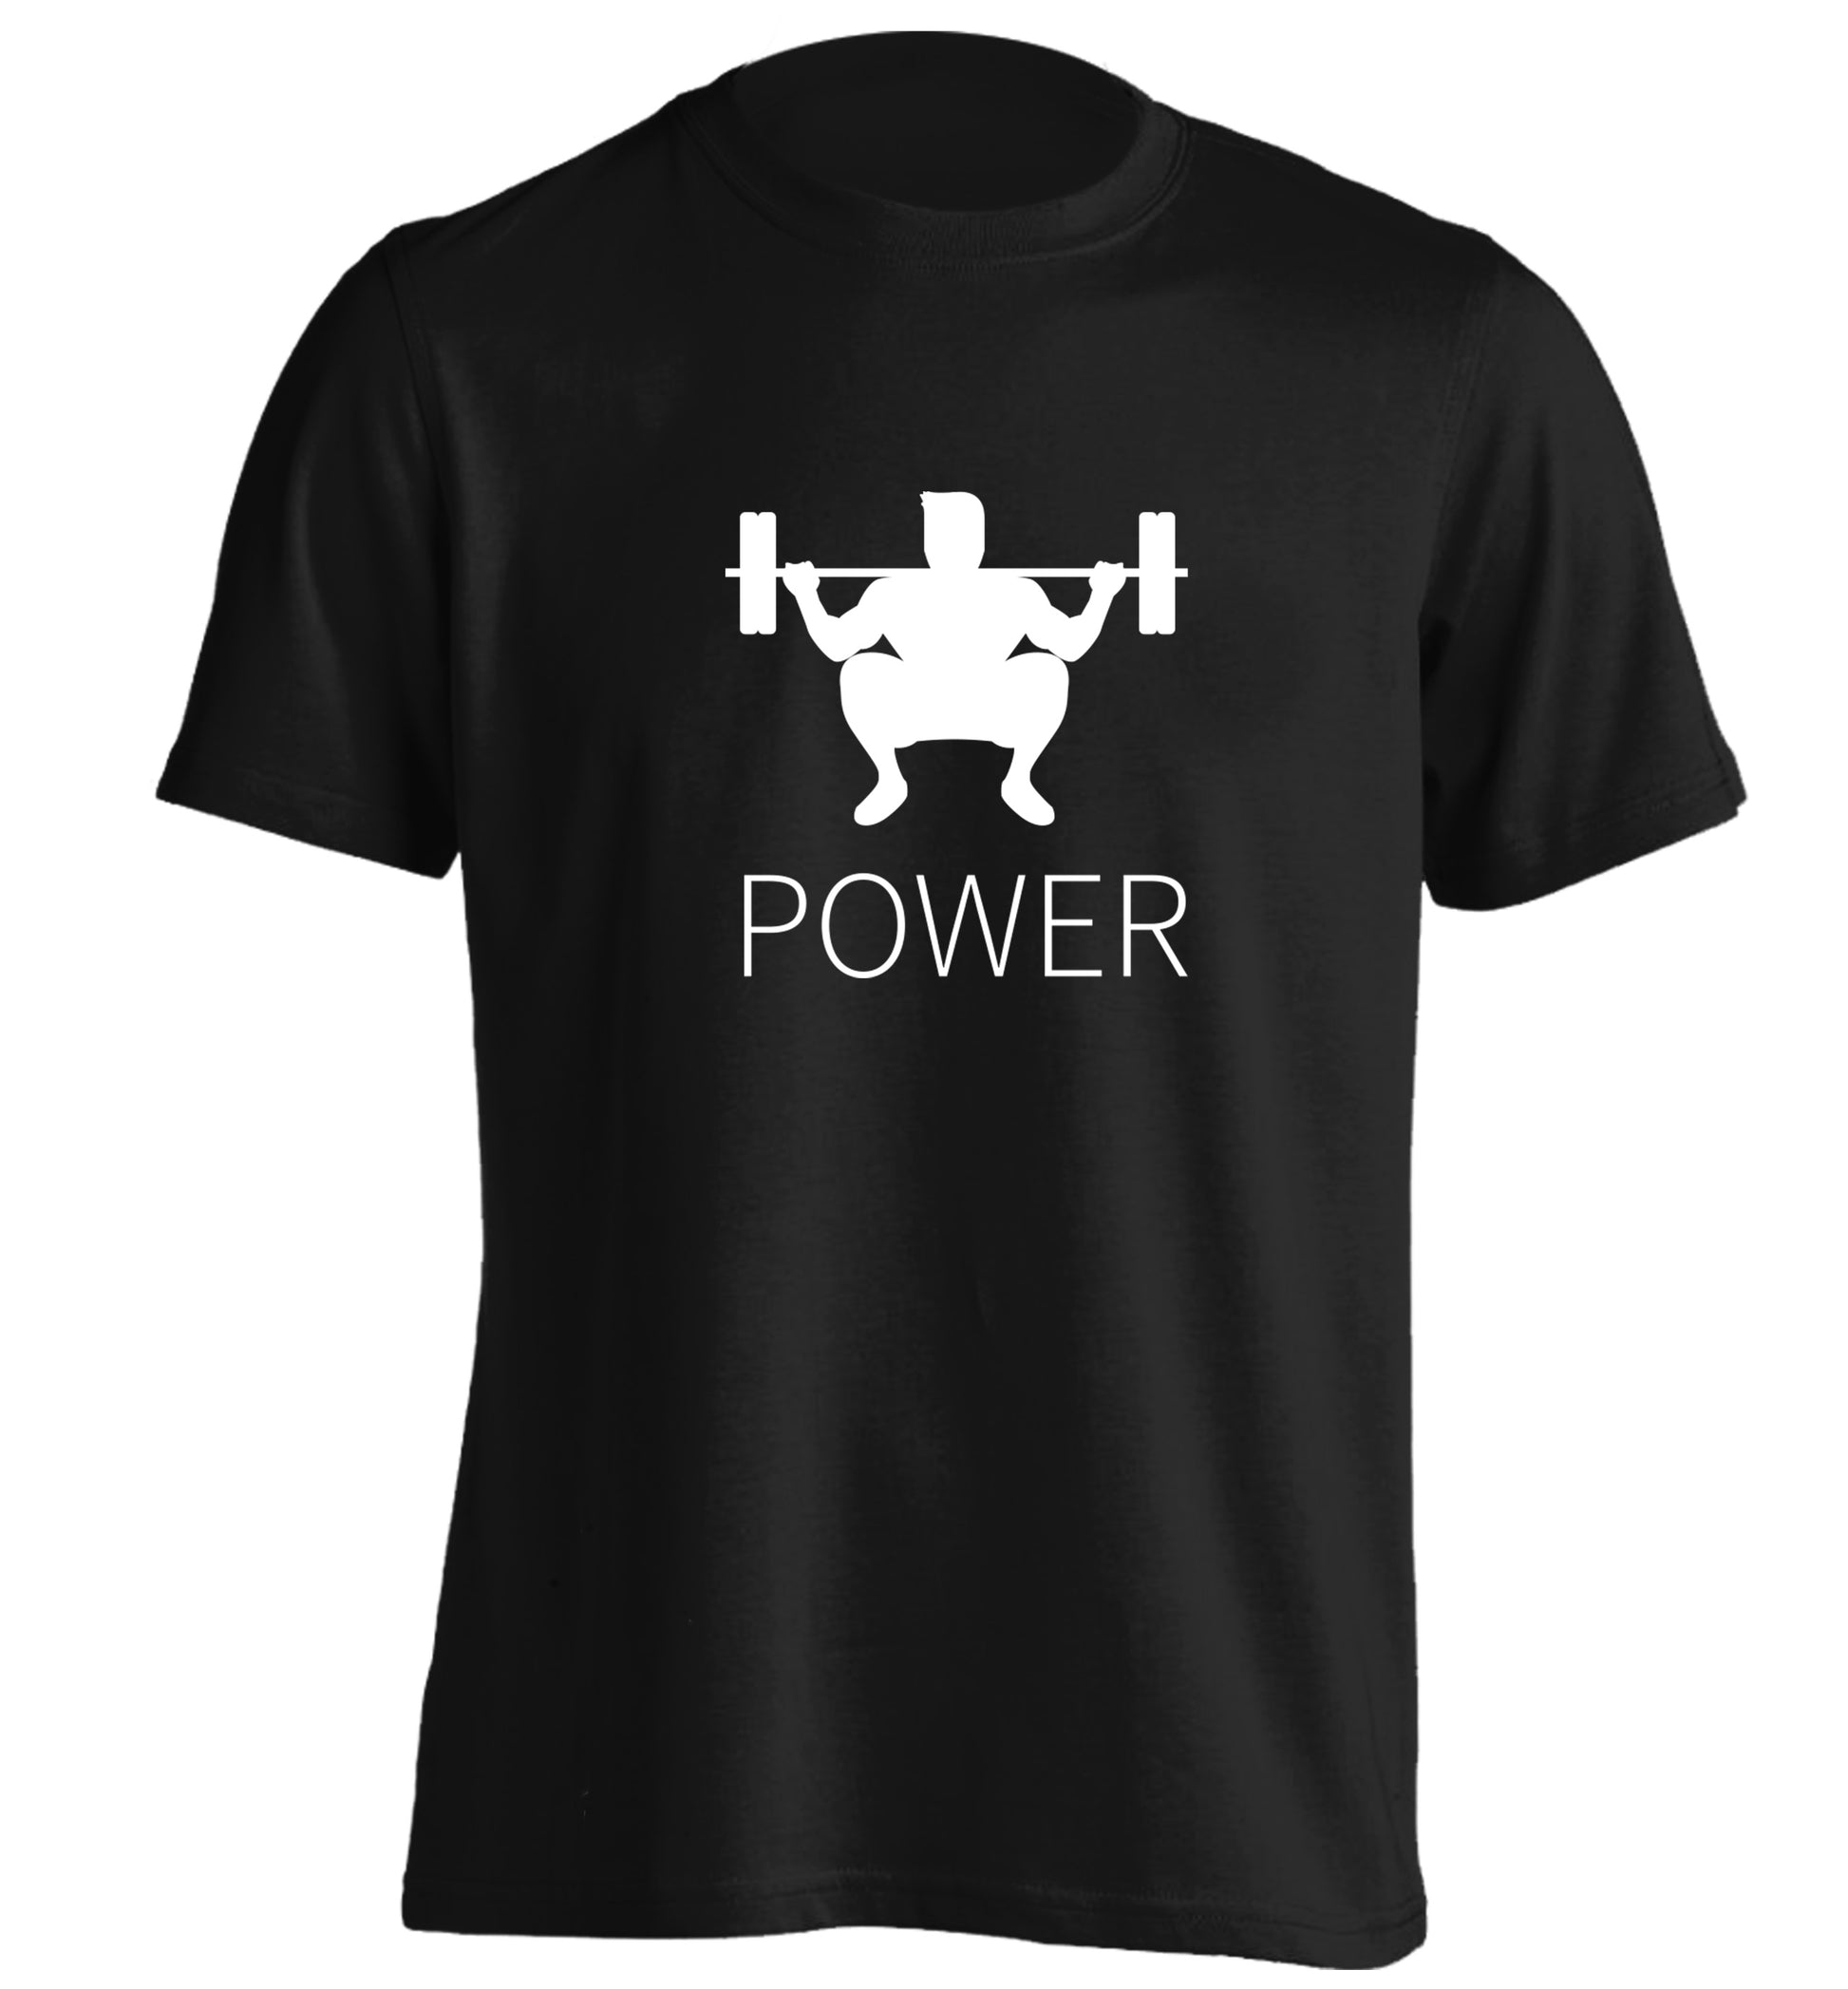 Lift power adults unisex black Tshirt 2XL